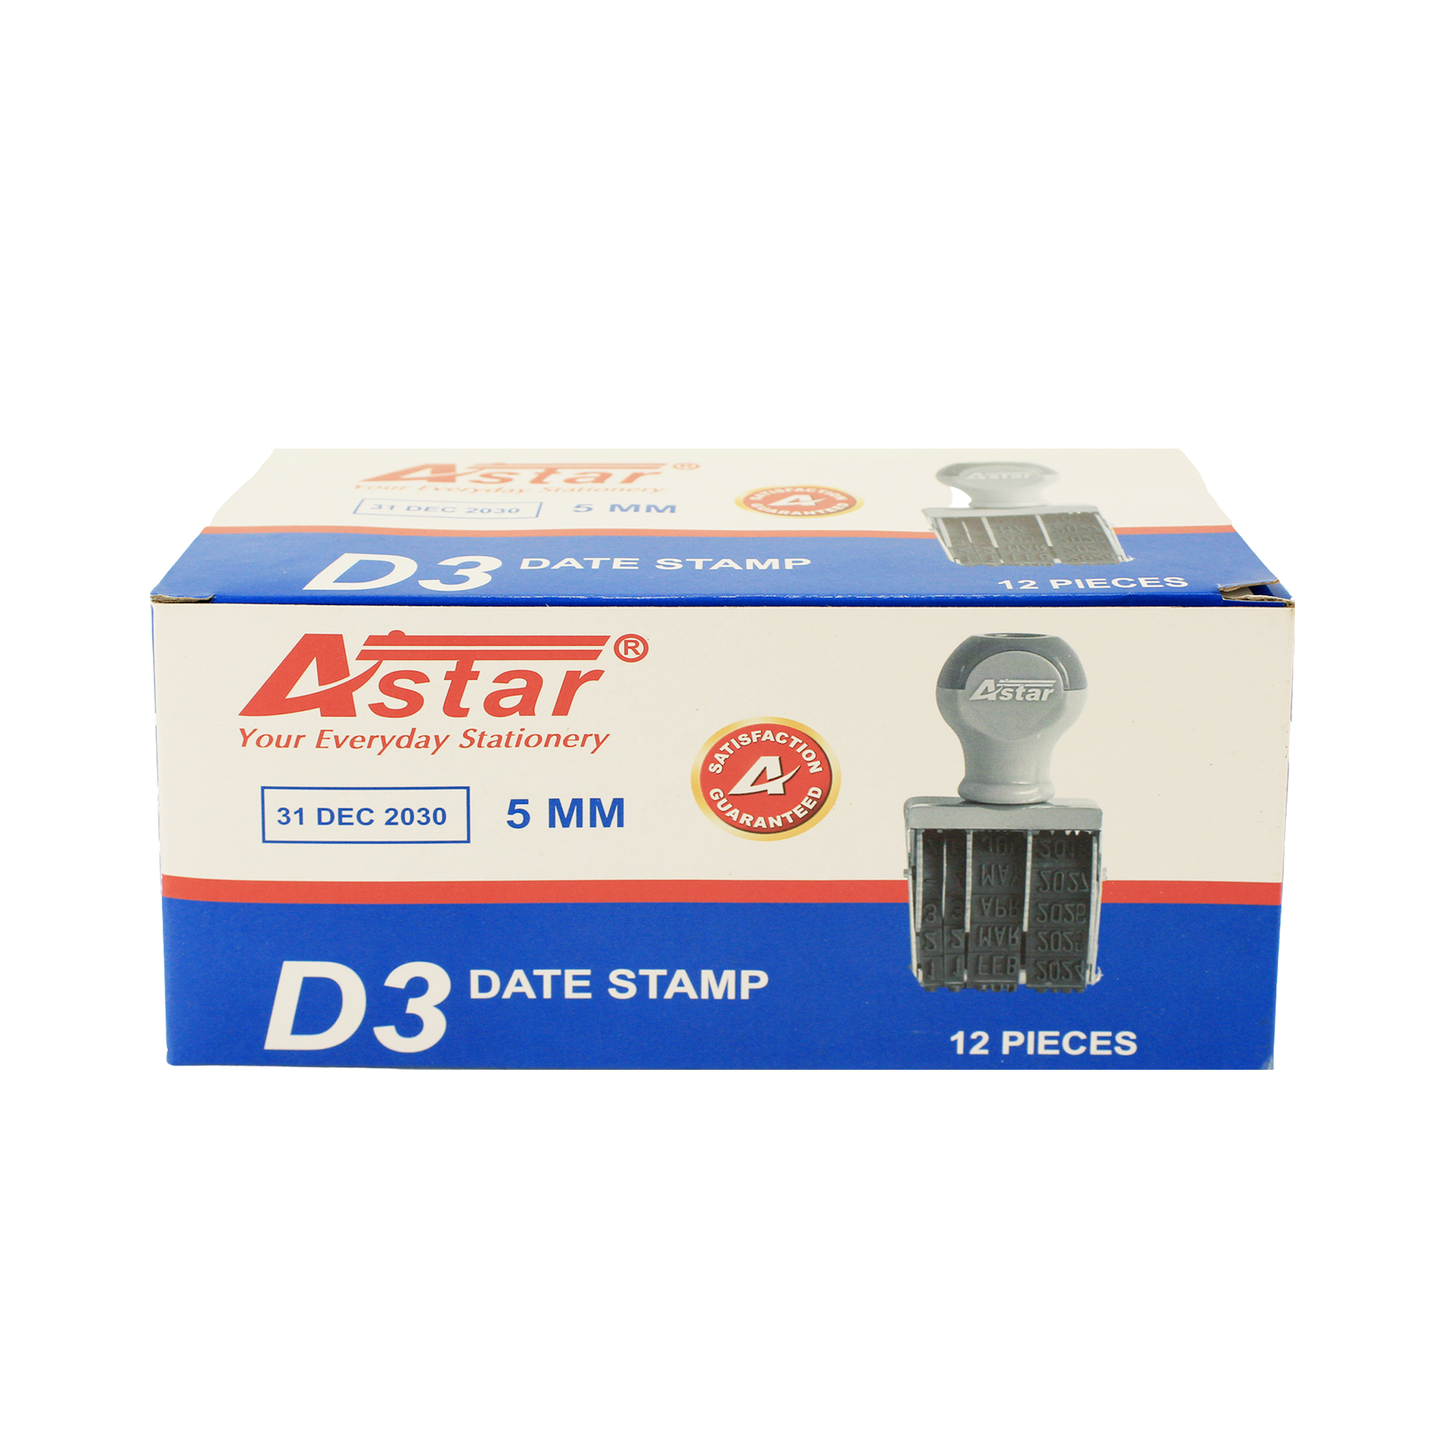 D3 - ASTAR DATE STAMP